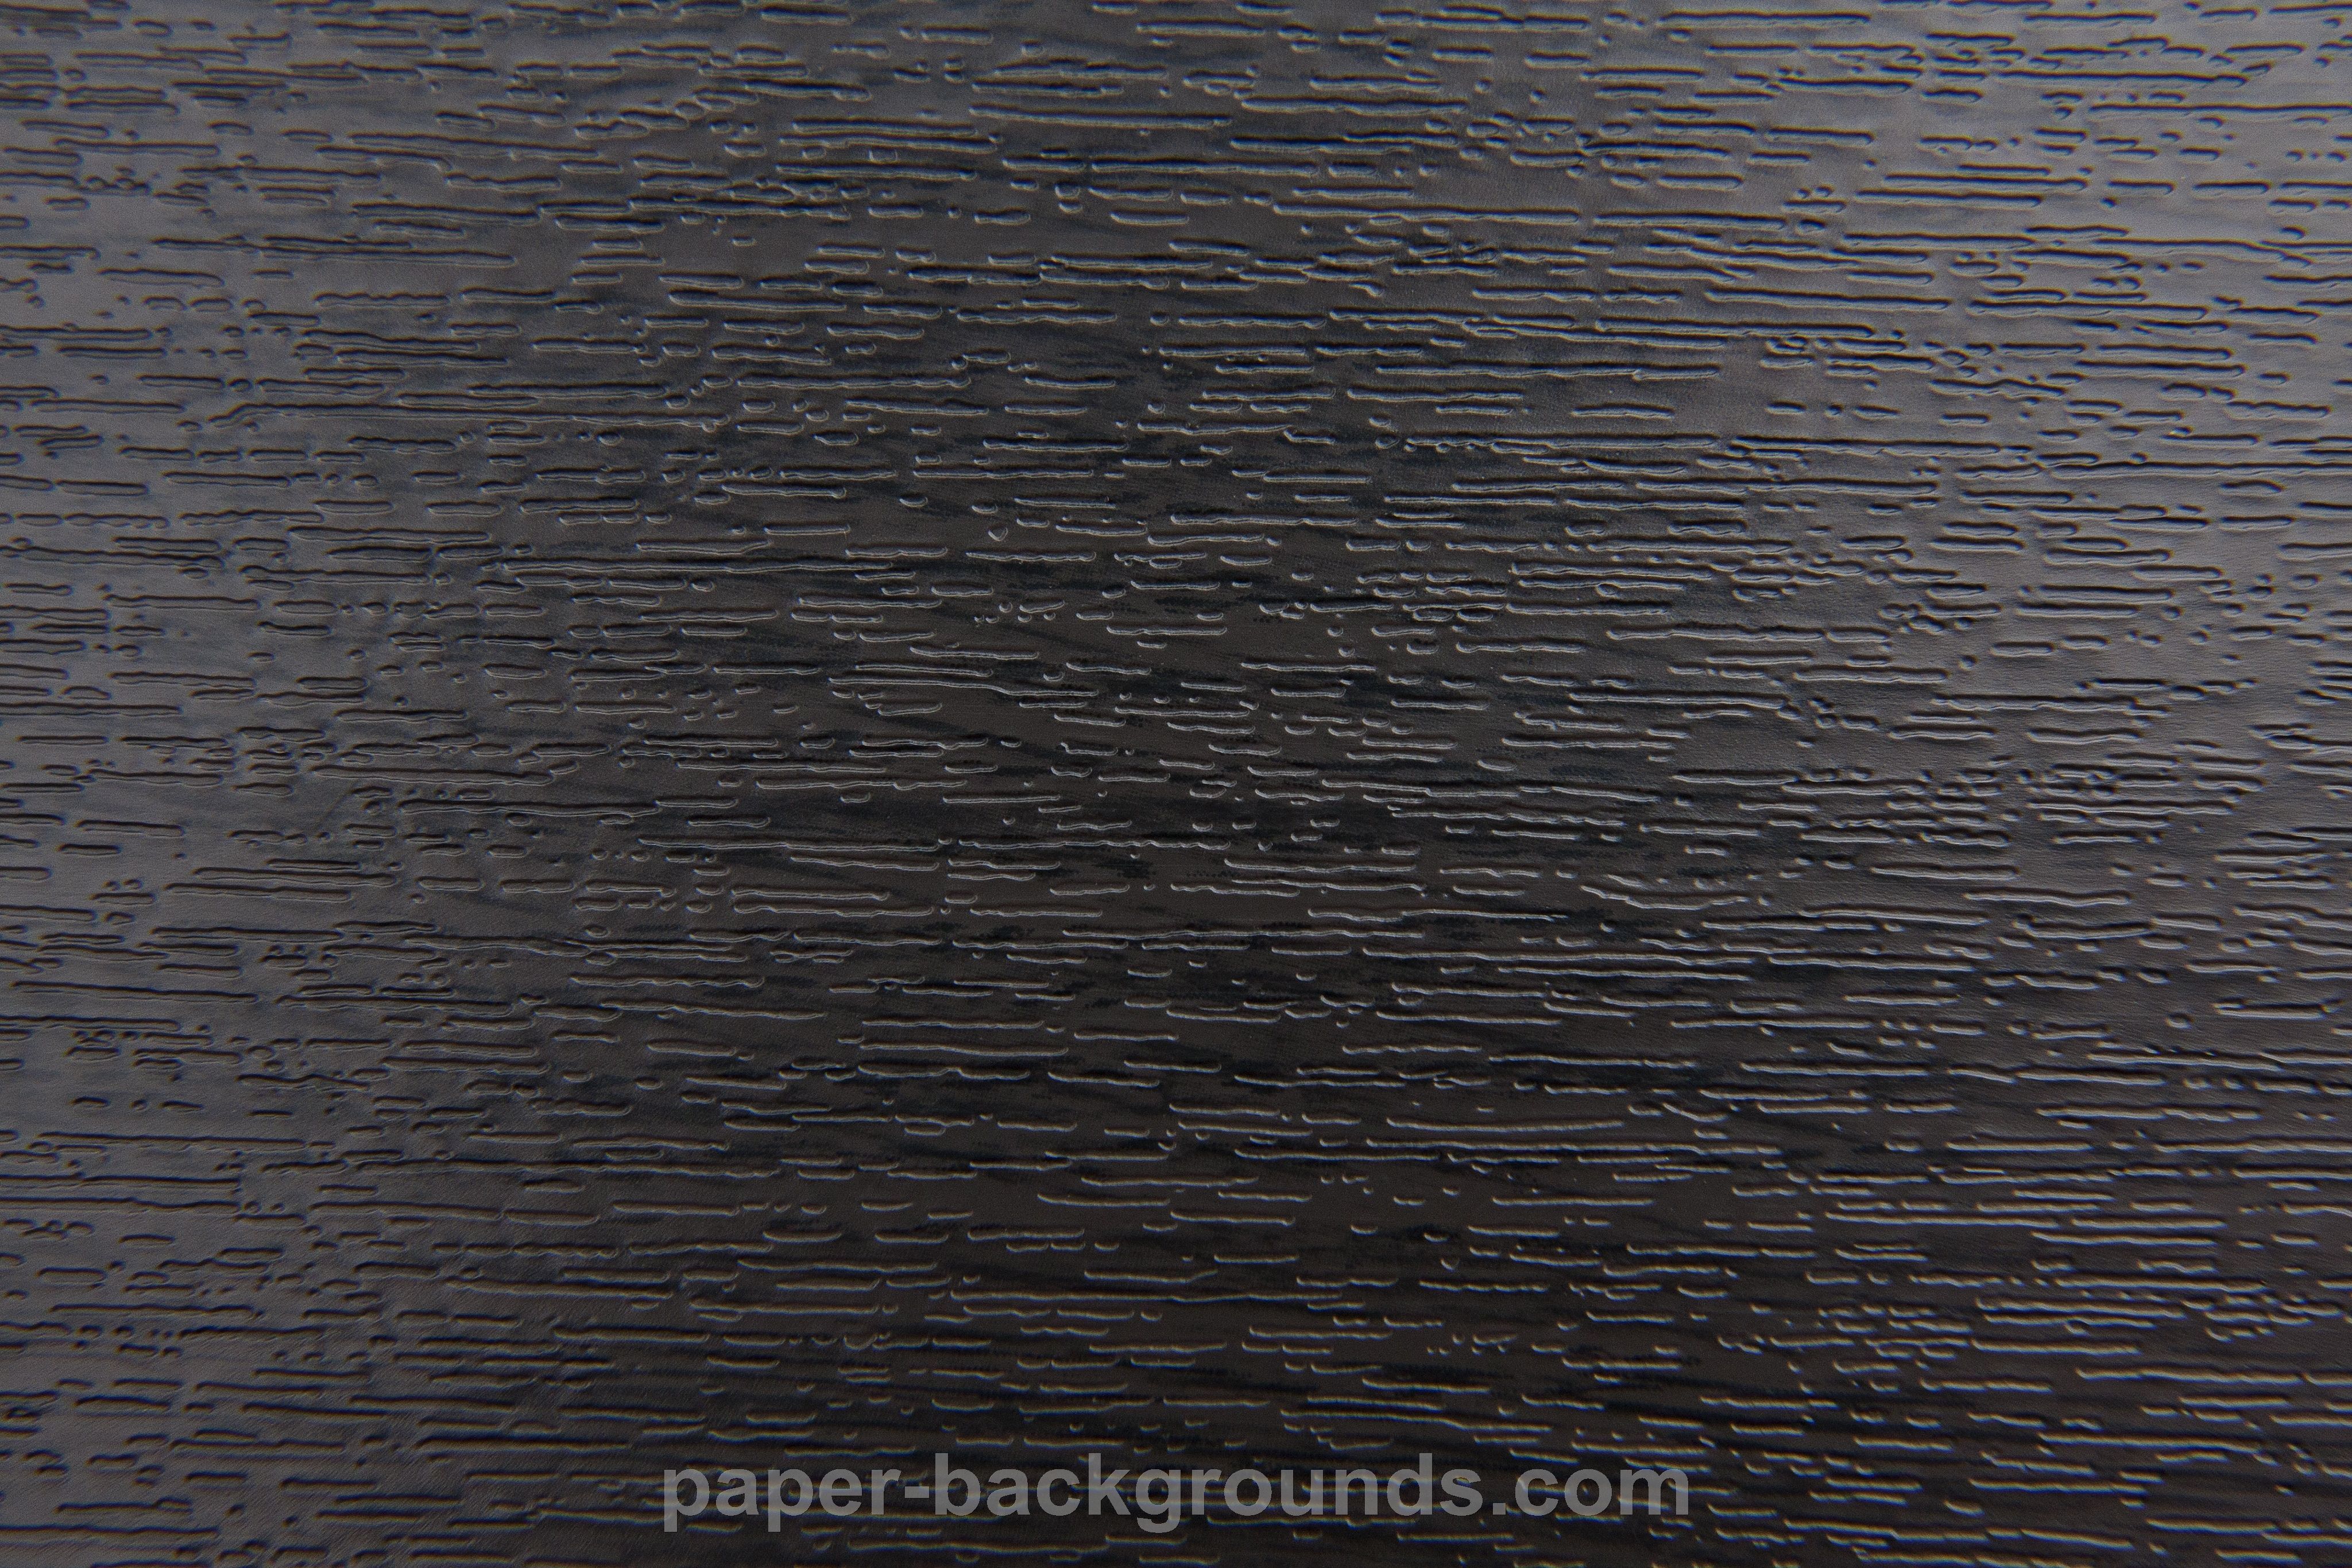 Paper Backgrounds | Dark Brown Textured Wood Furniture Background